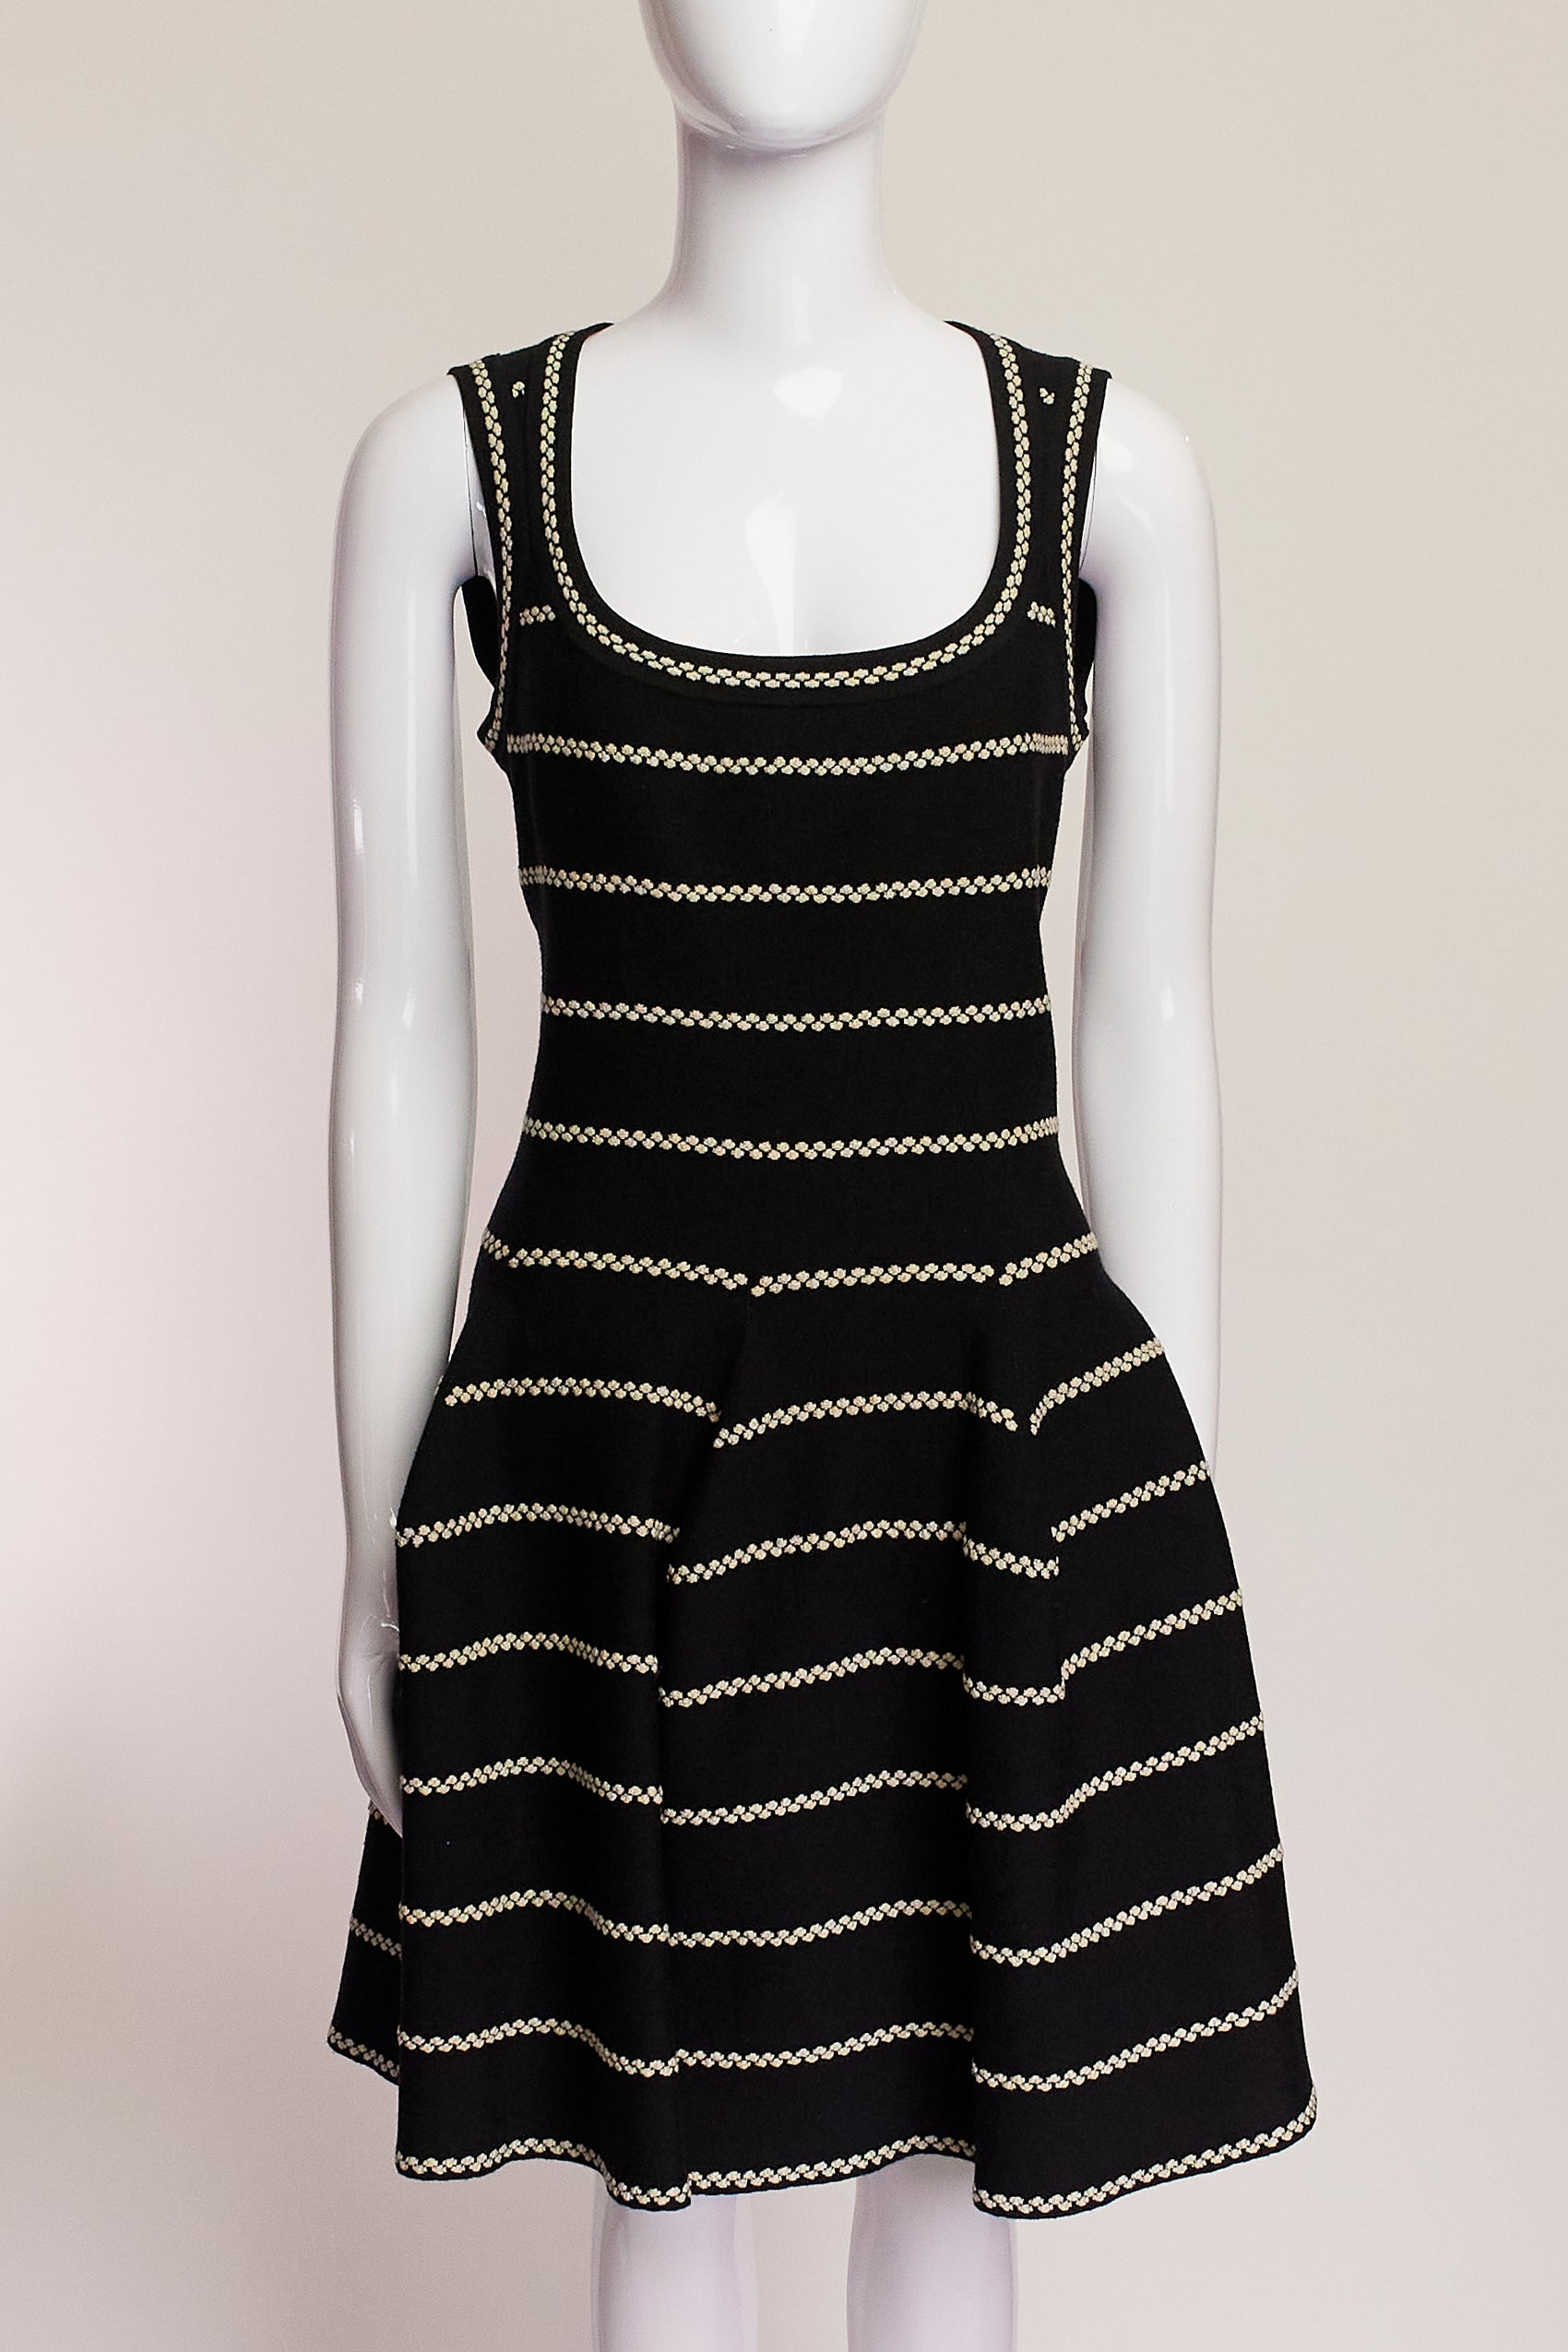 Alaia Black and White Striped Dress FR44 IT48